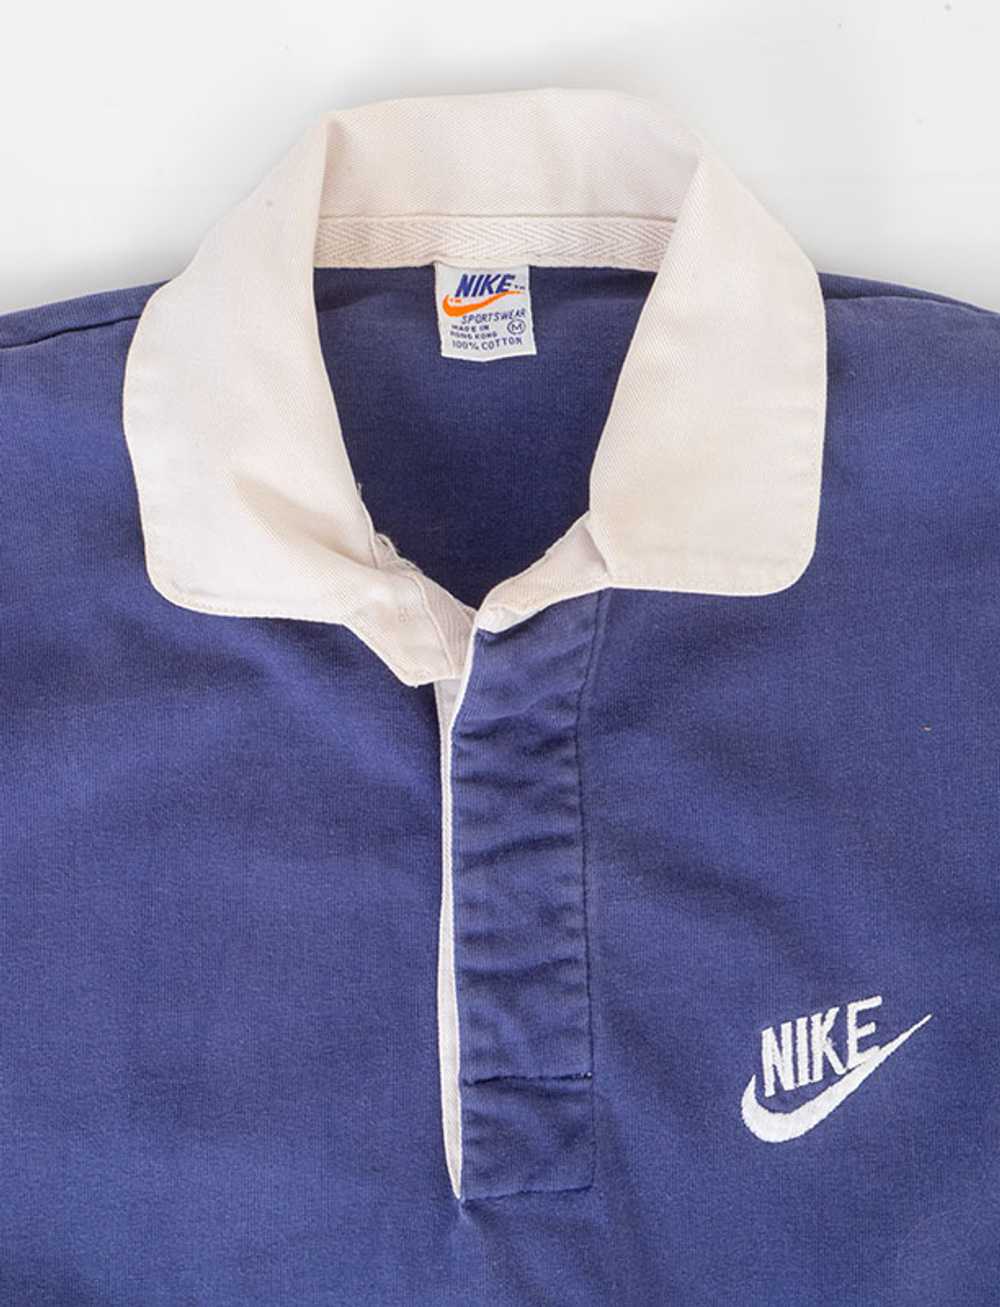 Vintage 1970s Orange Swoosh Nike Pullover - image 1